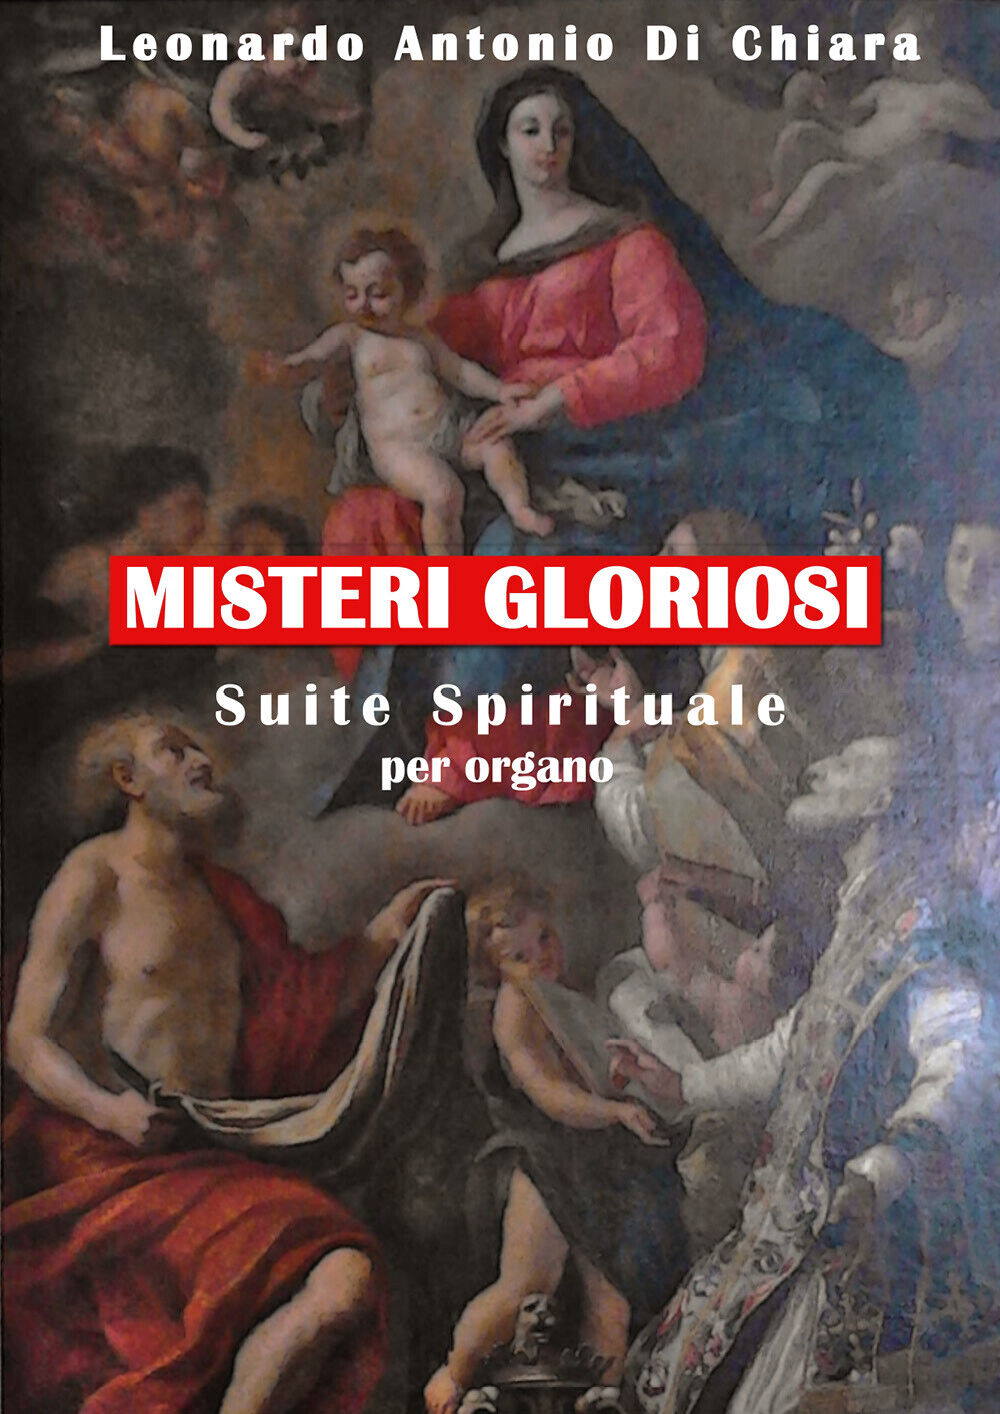 Misteri Gloriosi Suite Spirituale per organo di Leonardo Antonio Di Chiara,  202